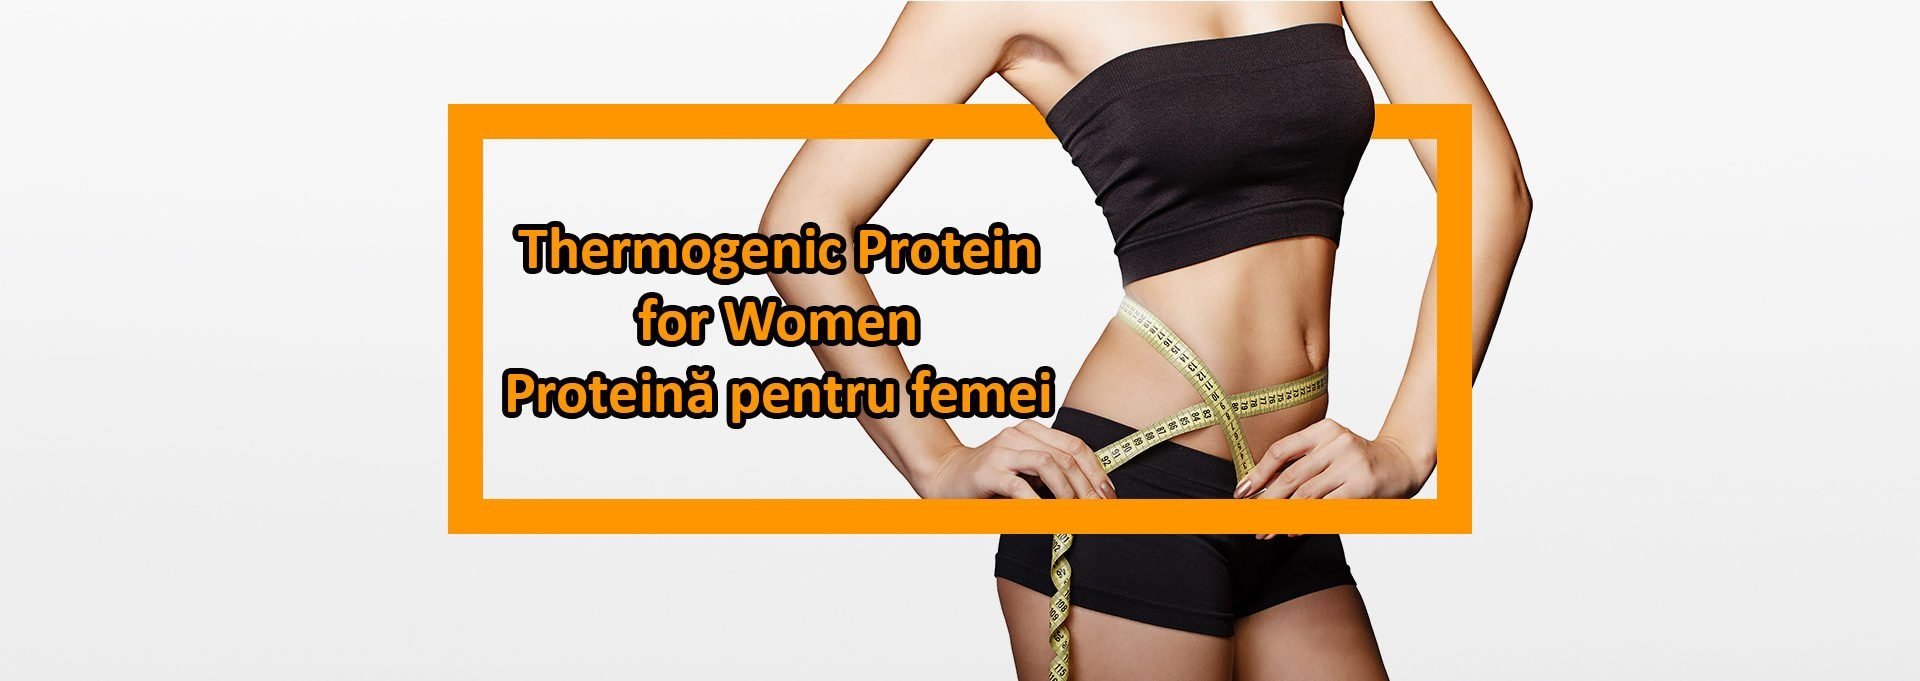 thermogenic protein women banner - proteina pentru femei